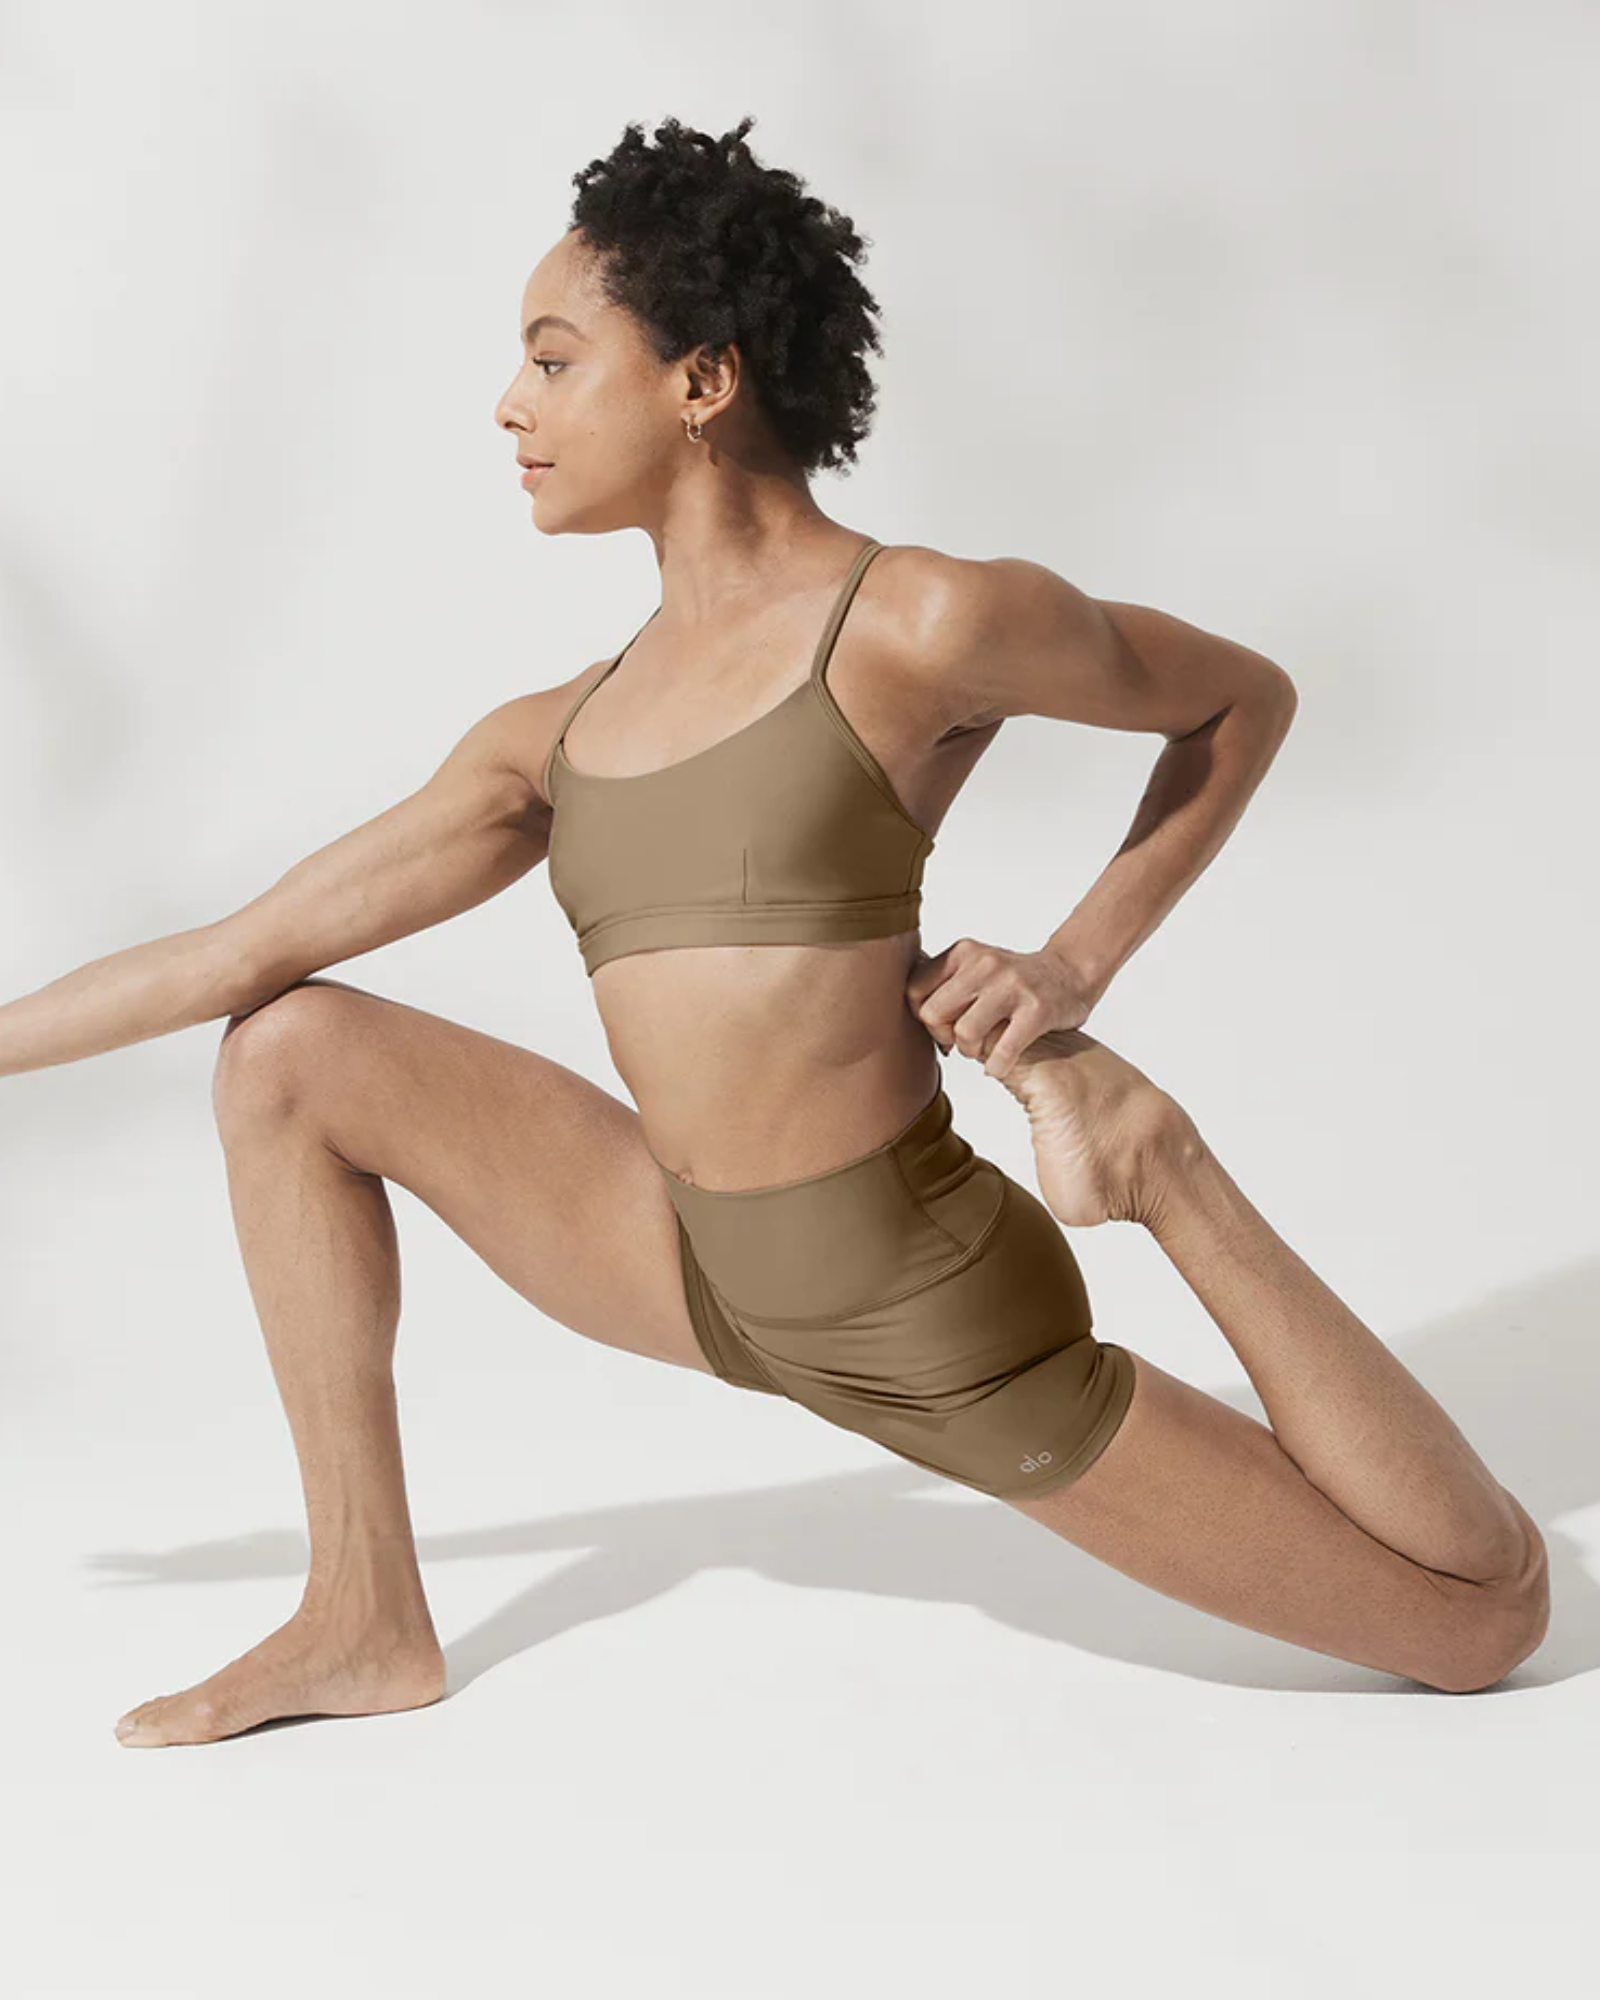 Alo Yoga “I Embody” — Victoria Gibbs Yoga